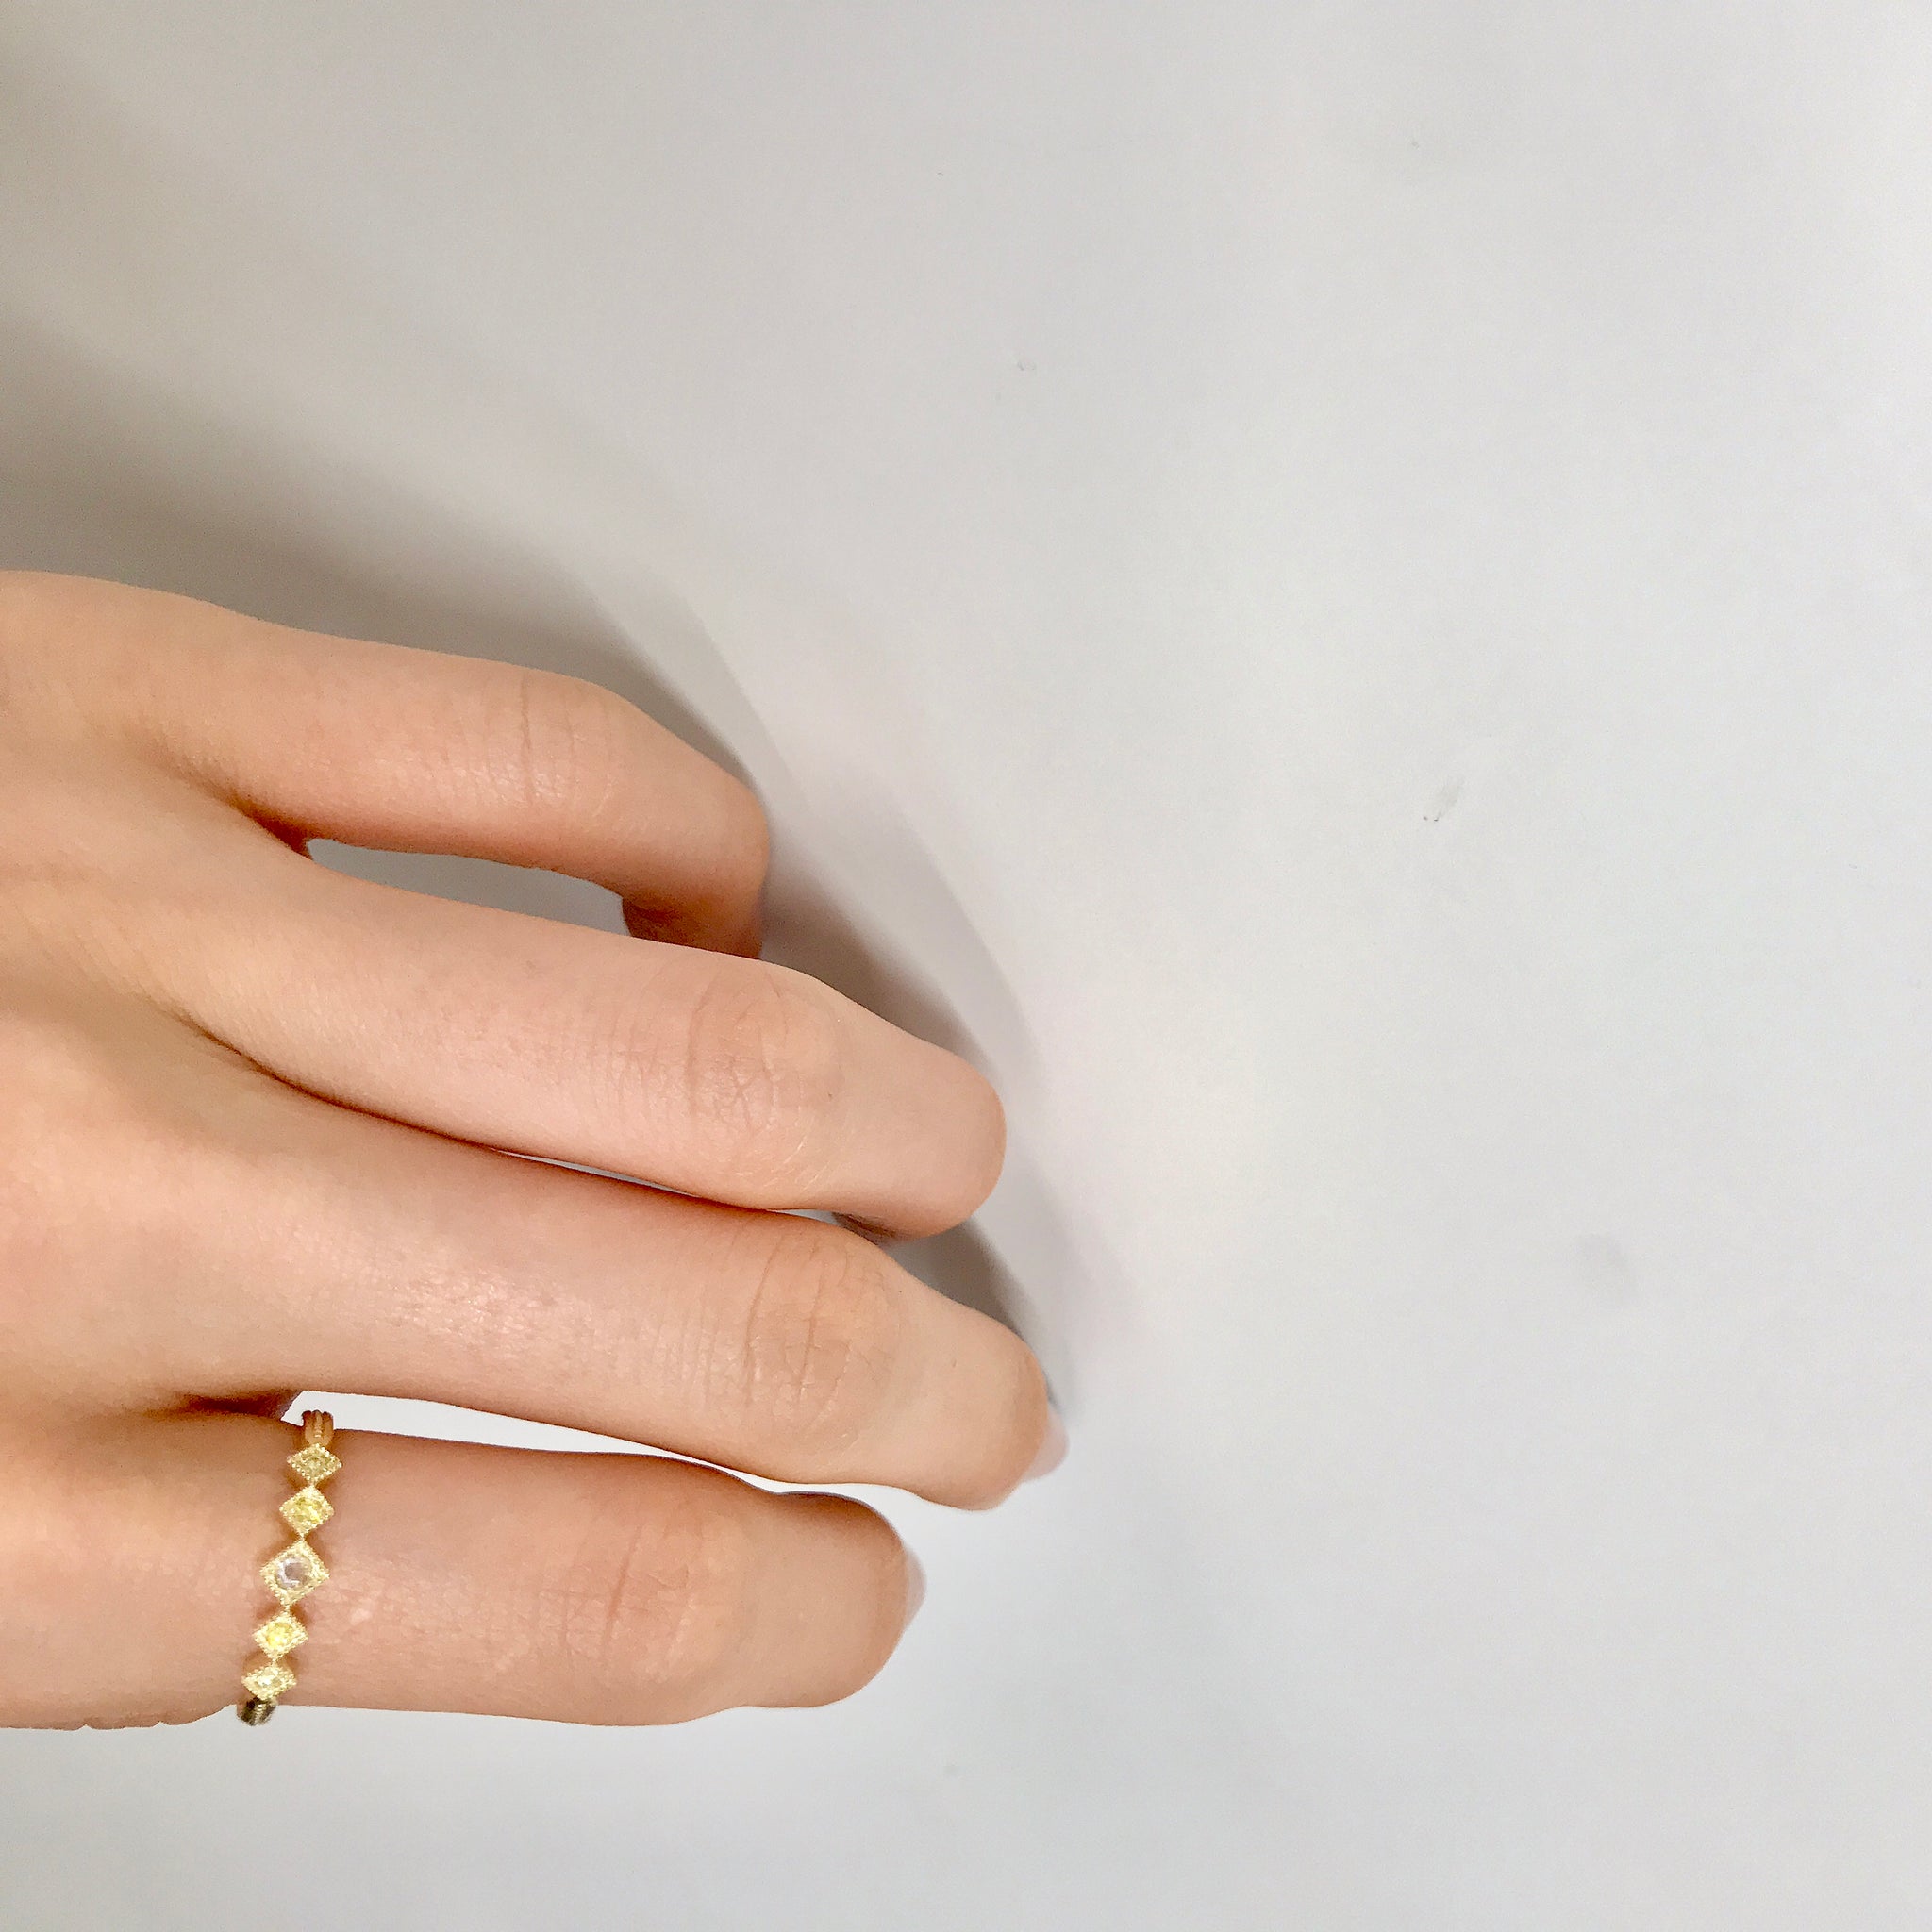 K18 Yellow Diamond ”Carrés” Ring